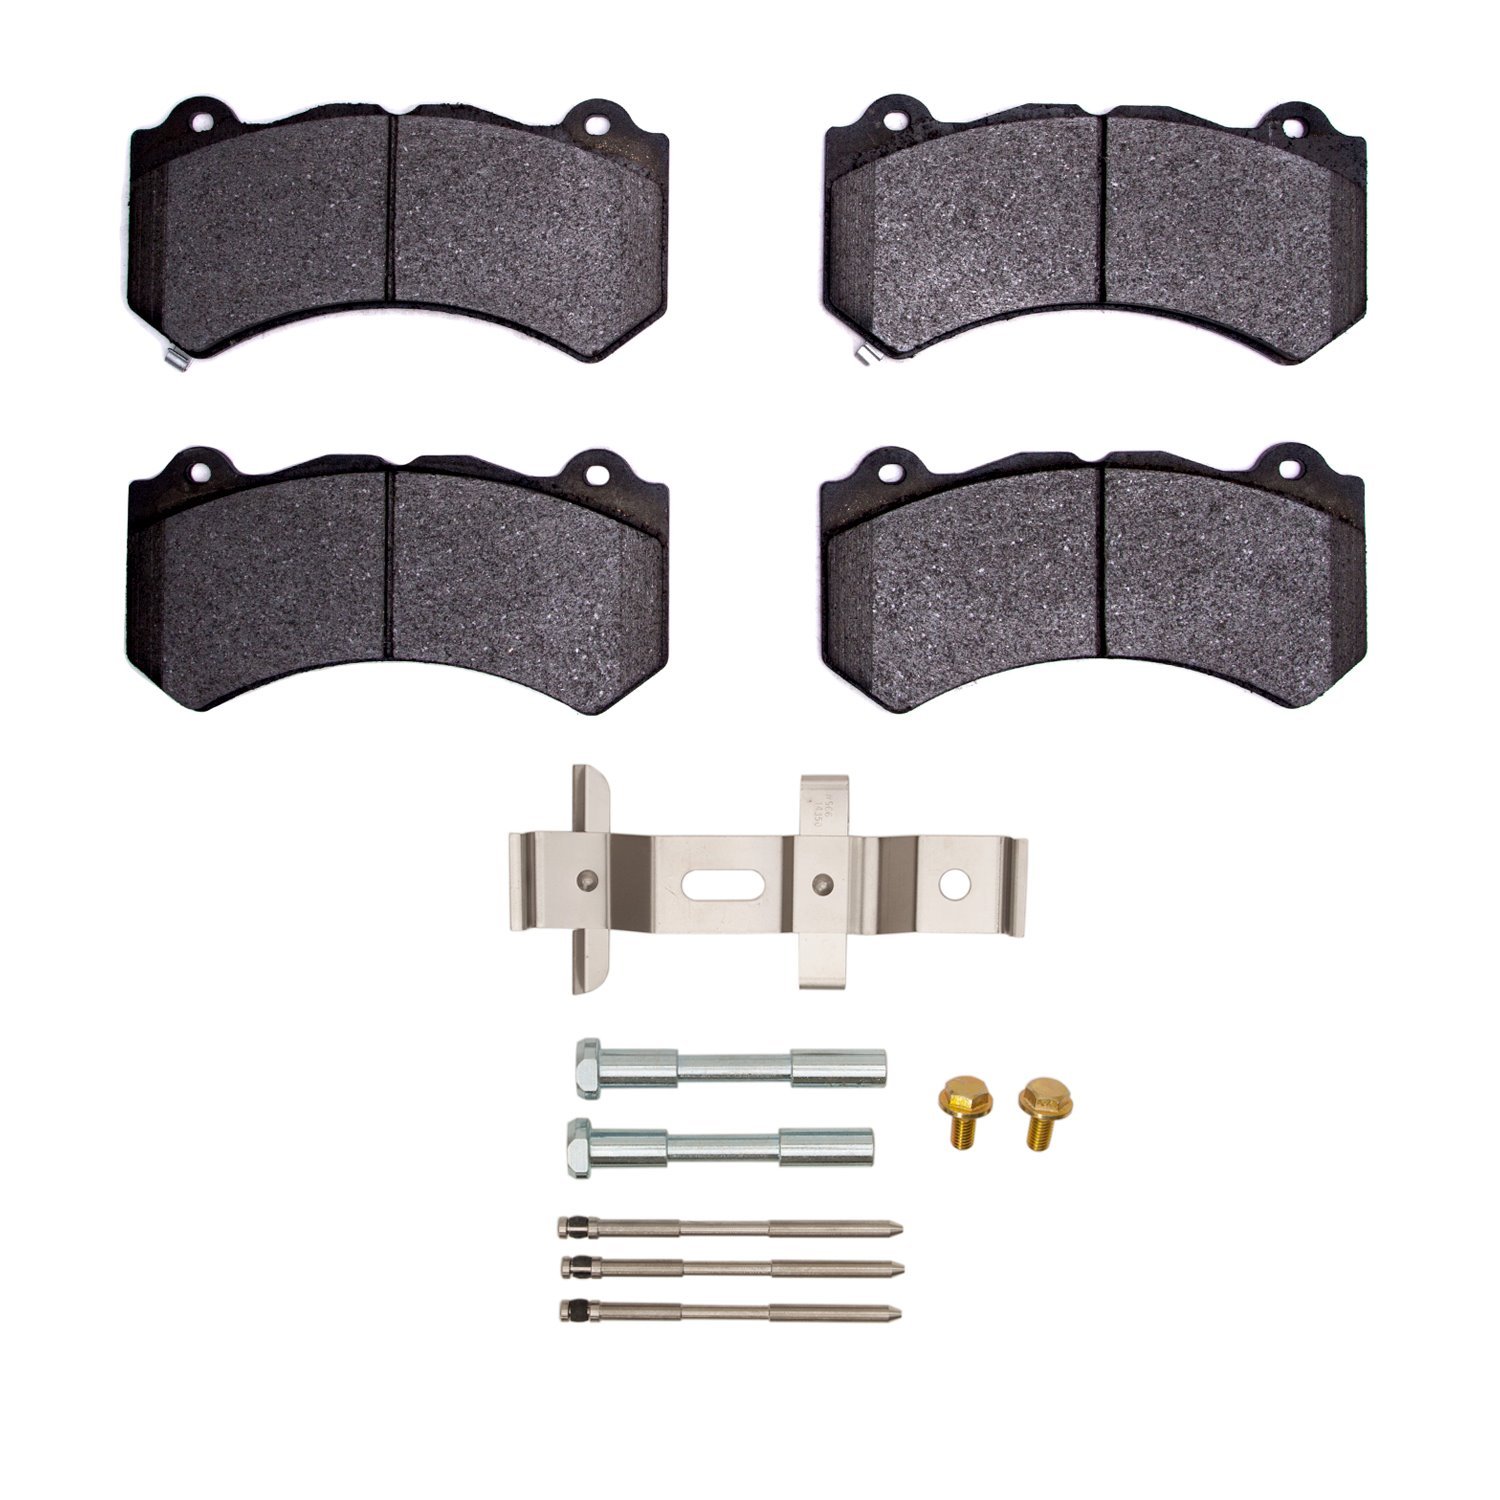 1311-1405-01 3000-Series Semi-Metallic Brake Pads & Hardware Kit, Fits Select Multiple Makes/Models, Position: Front